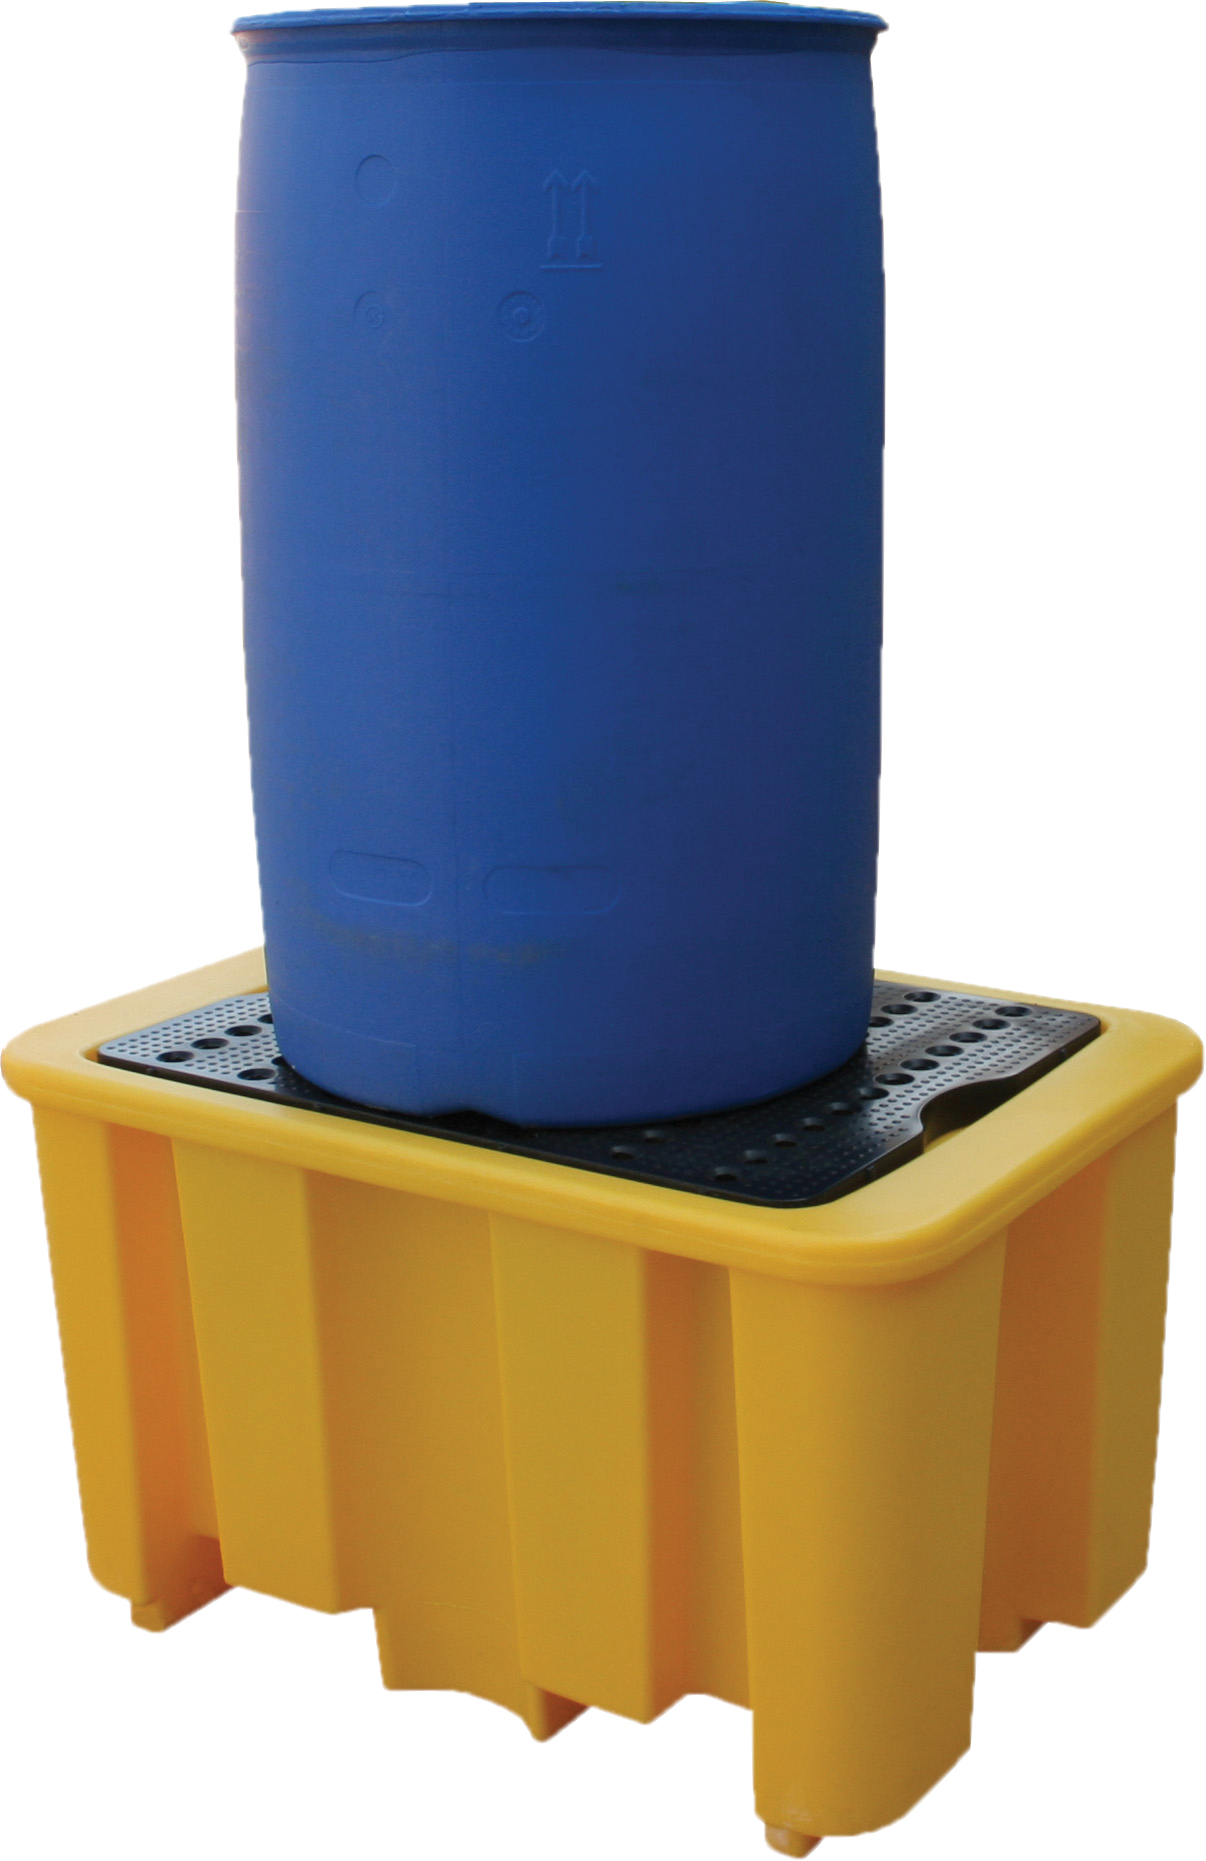 Spillpallet for 1 x 205L drum - Yellow